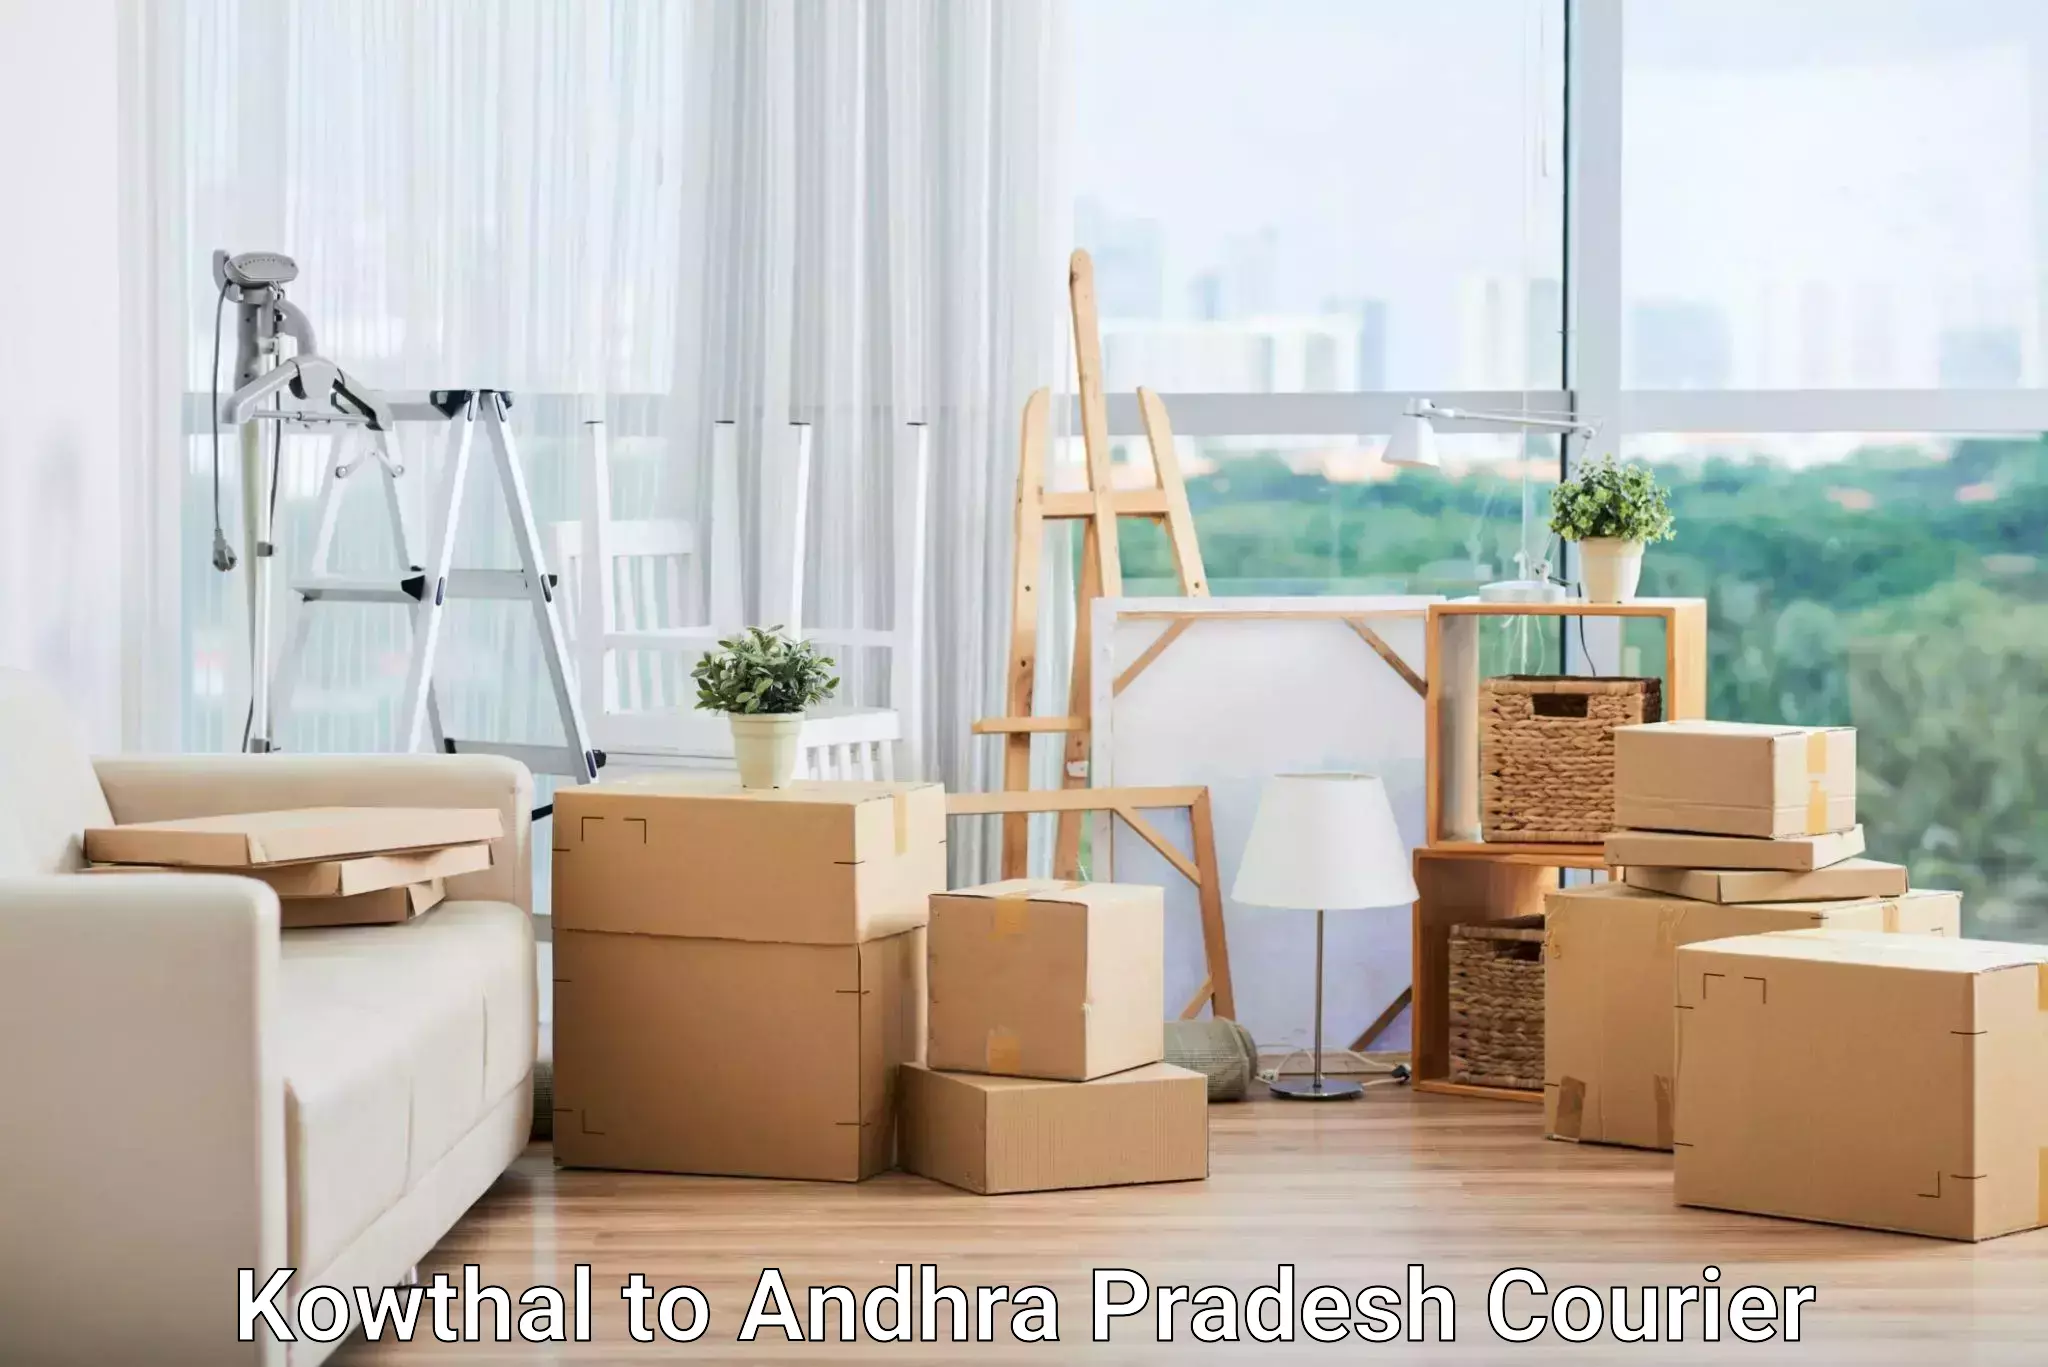 Courier service innovation Kowthal to Andhra Pradesh